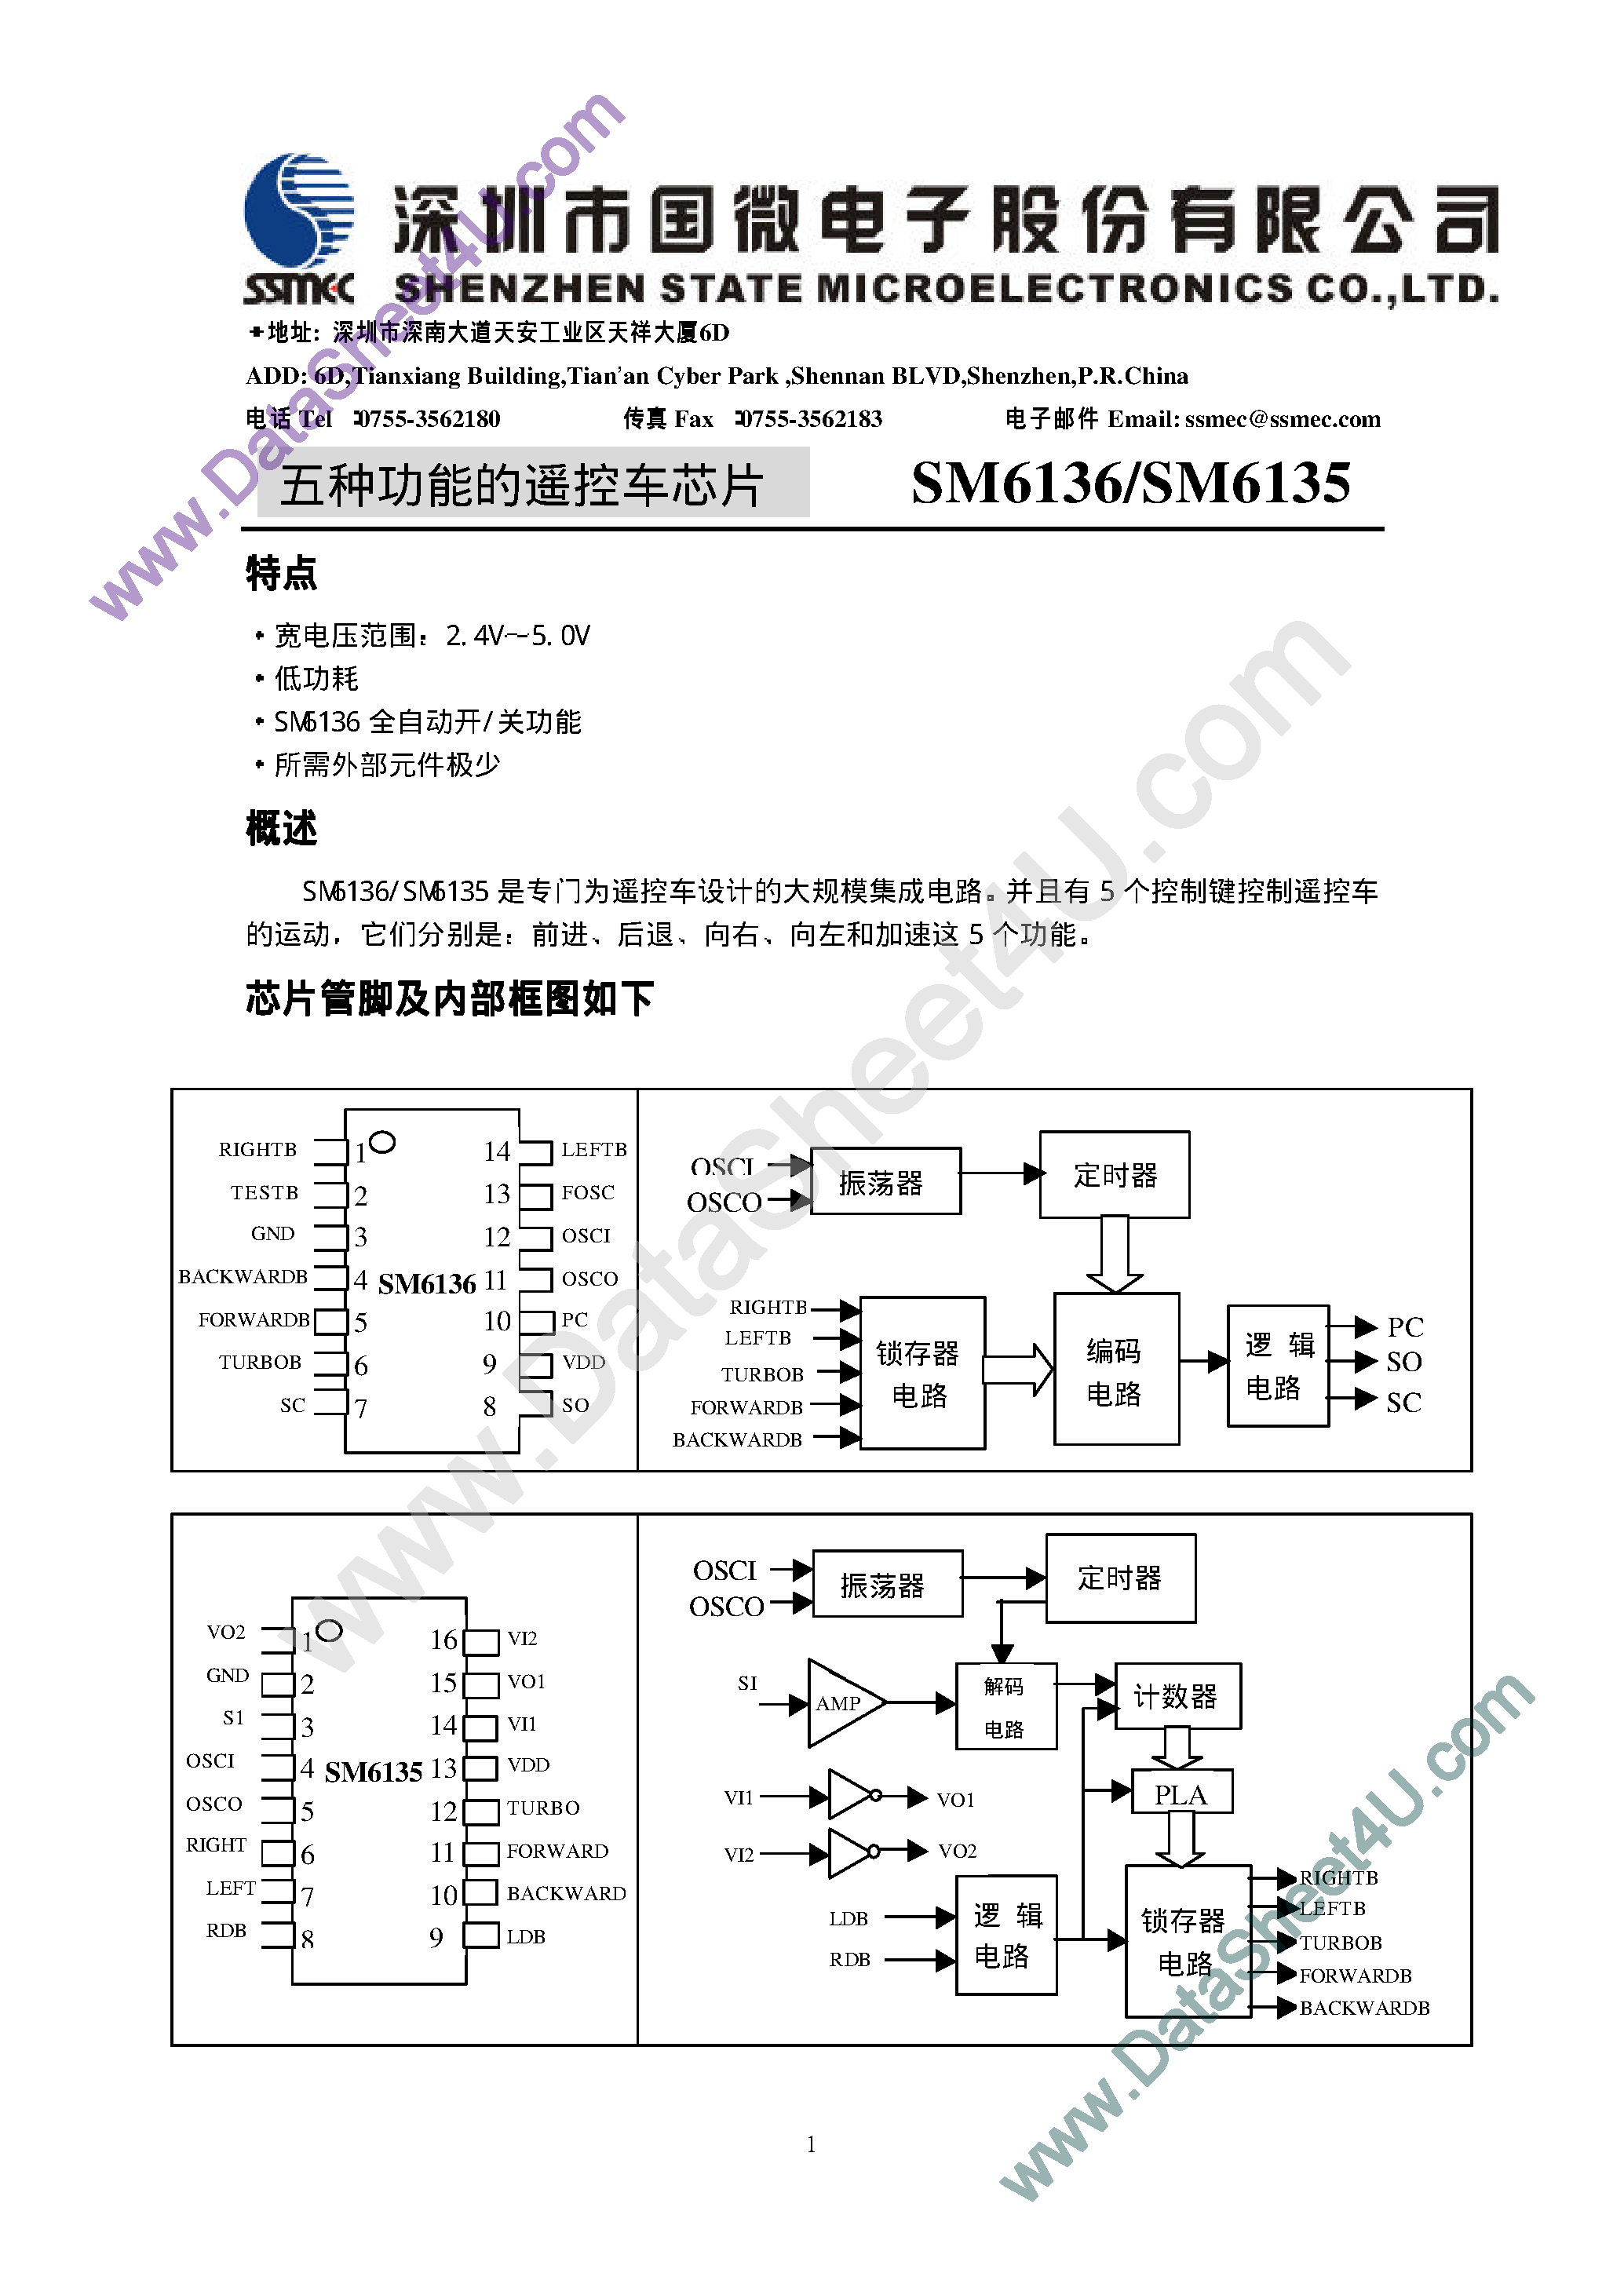 Datasheet SM6135 - (SM6135 / SM6136) SHENZHEN STATE MICROELECTRONICS page 1